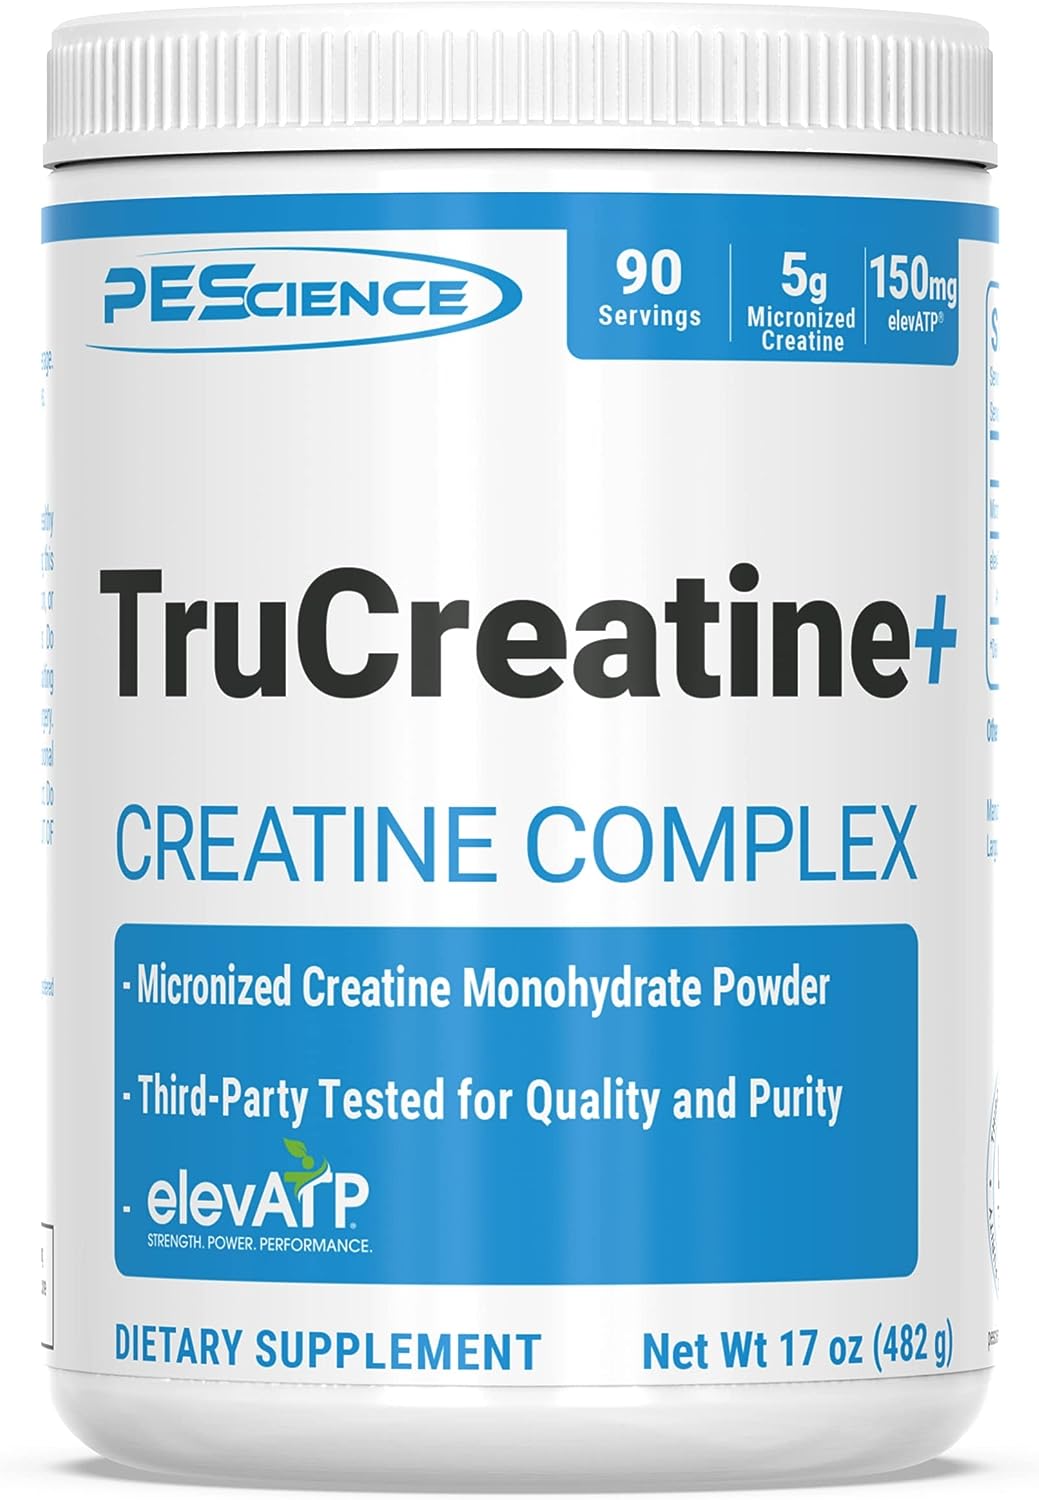 PEScience TruCreatine+ Pure Creatine Monohydrate Powder 90 Servicios 482Gr.